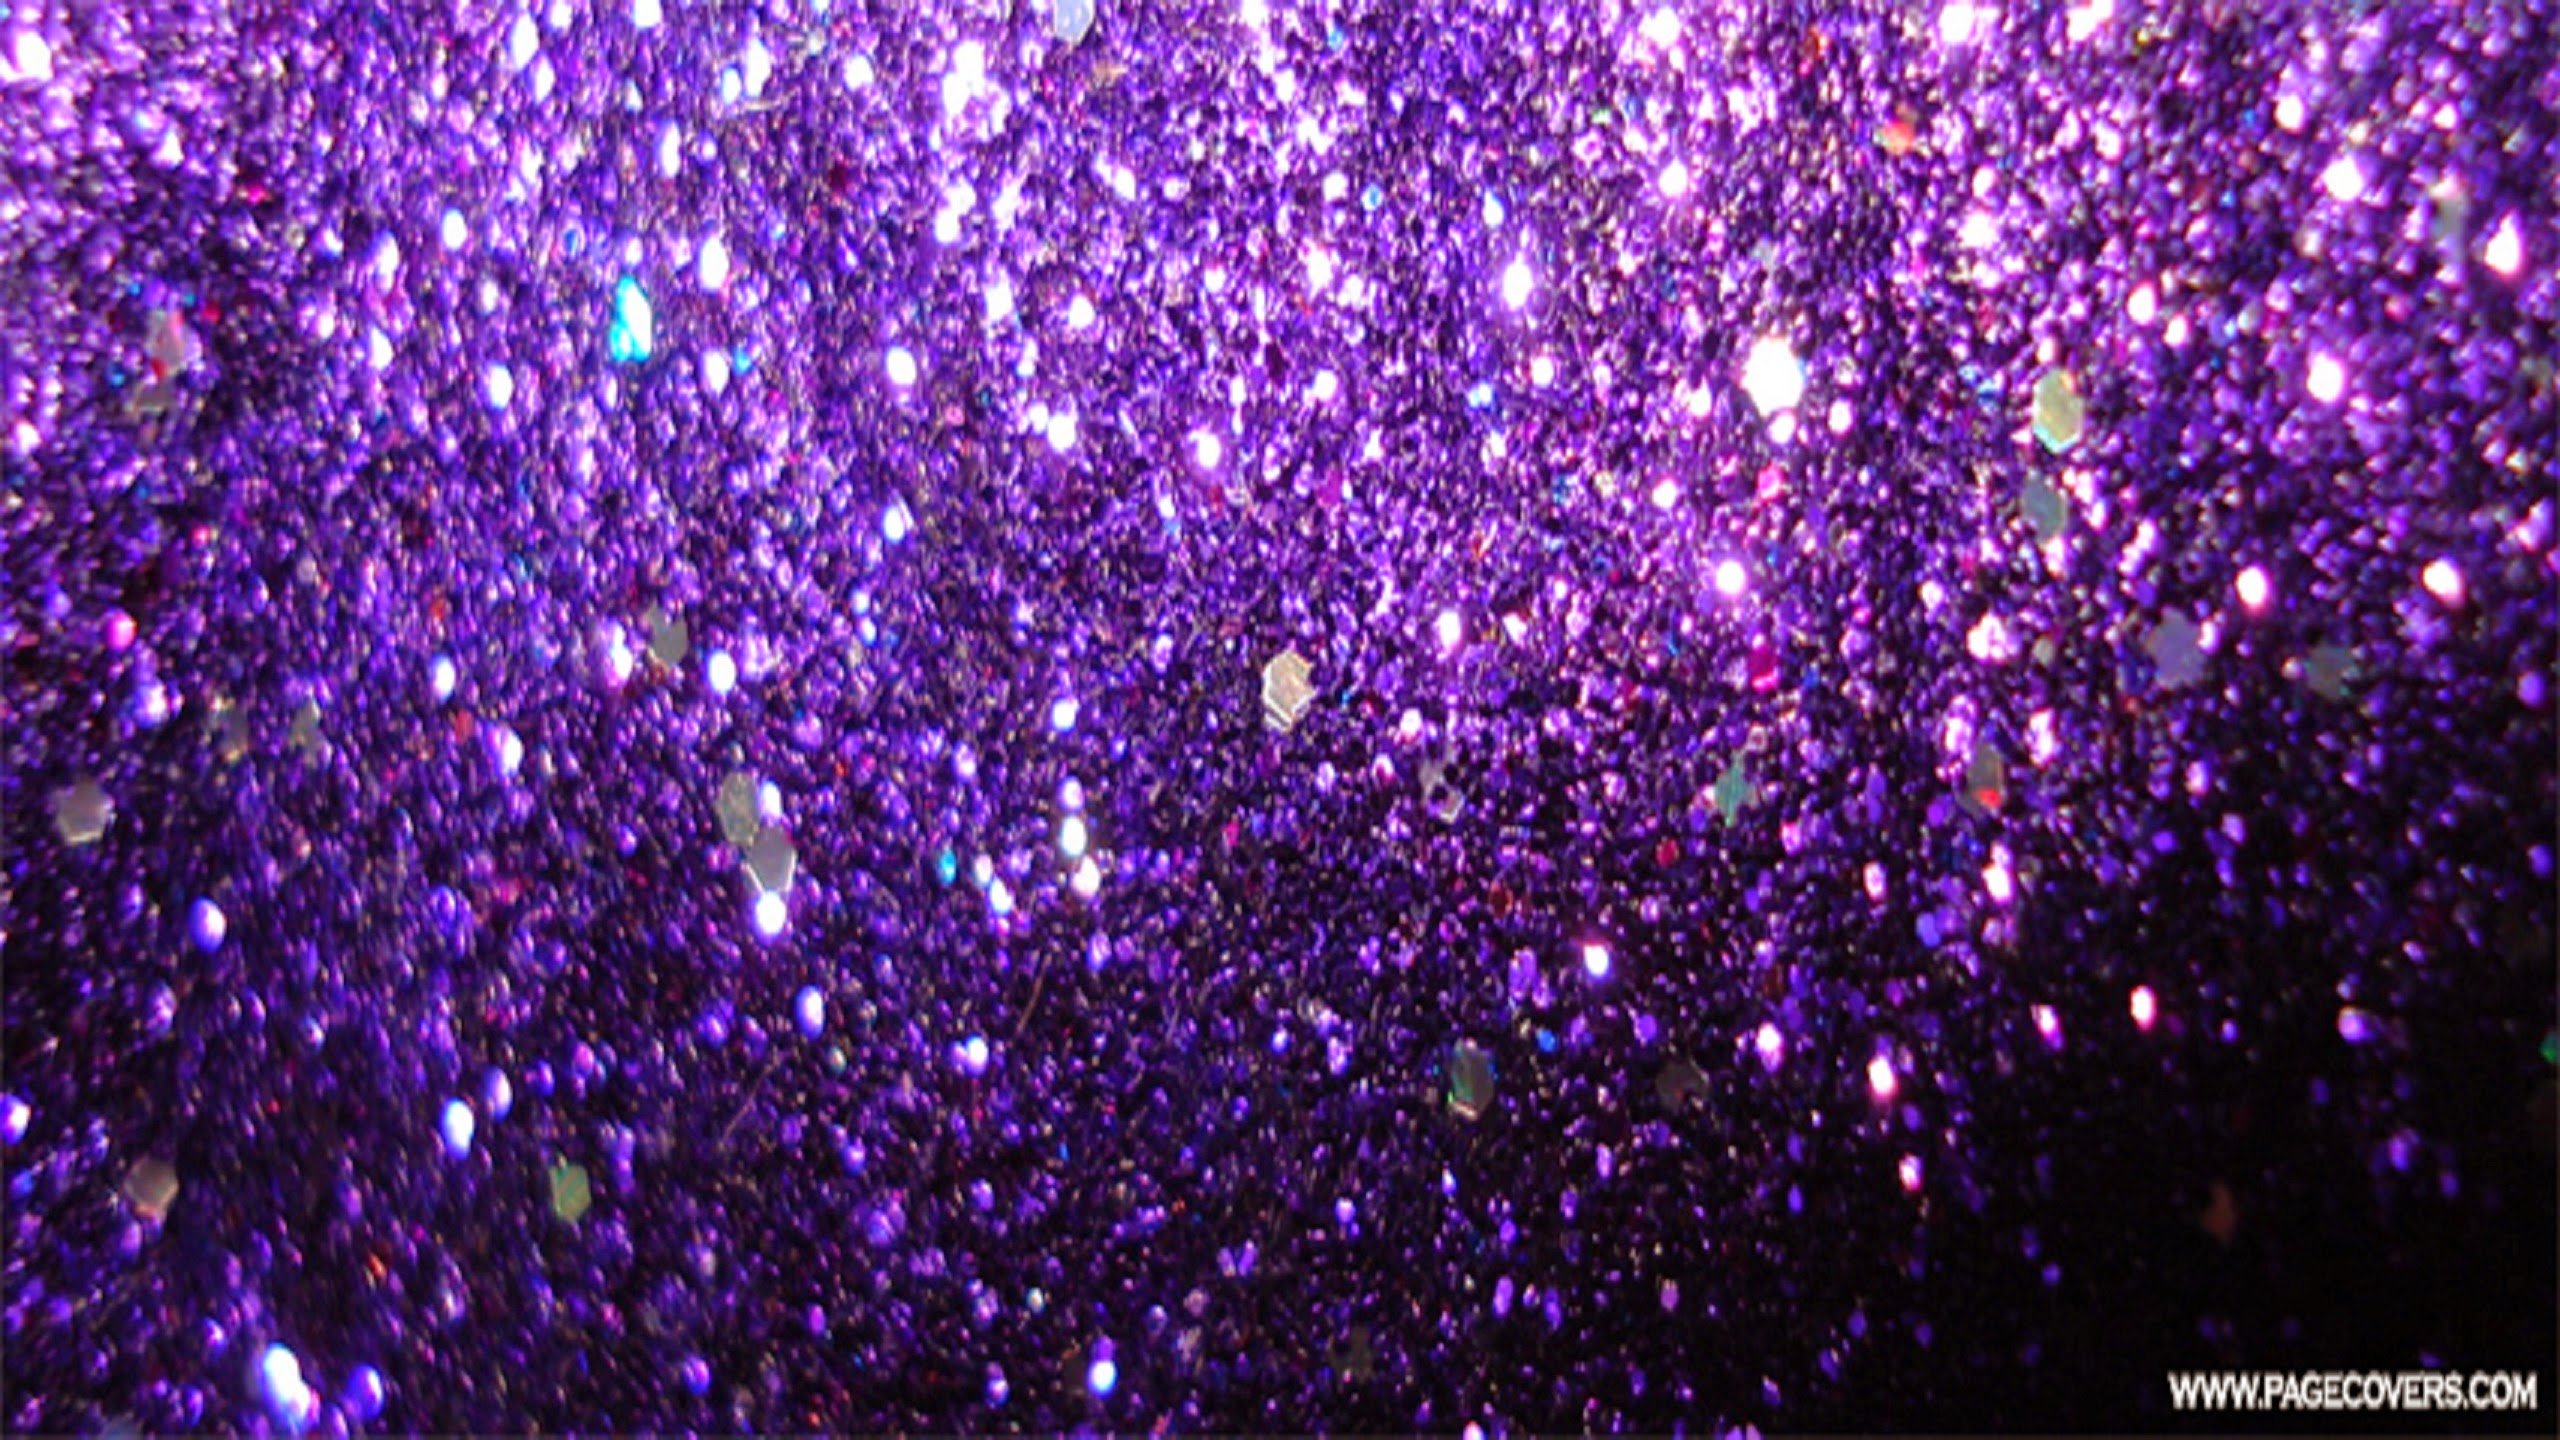 Purple Sparkles Wallpaper Anna poellet 14817 views 2560x1440